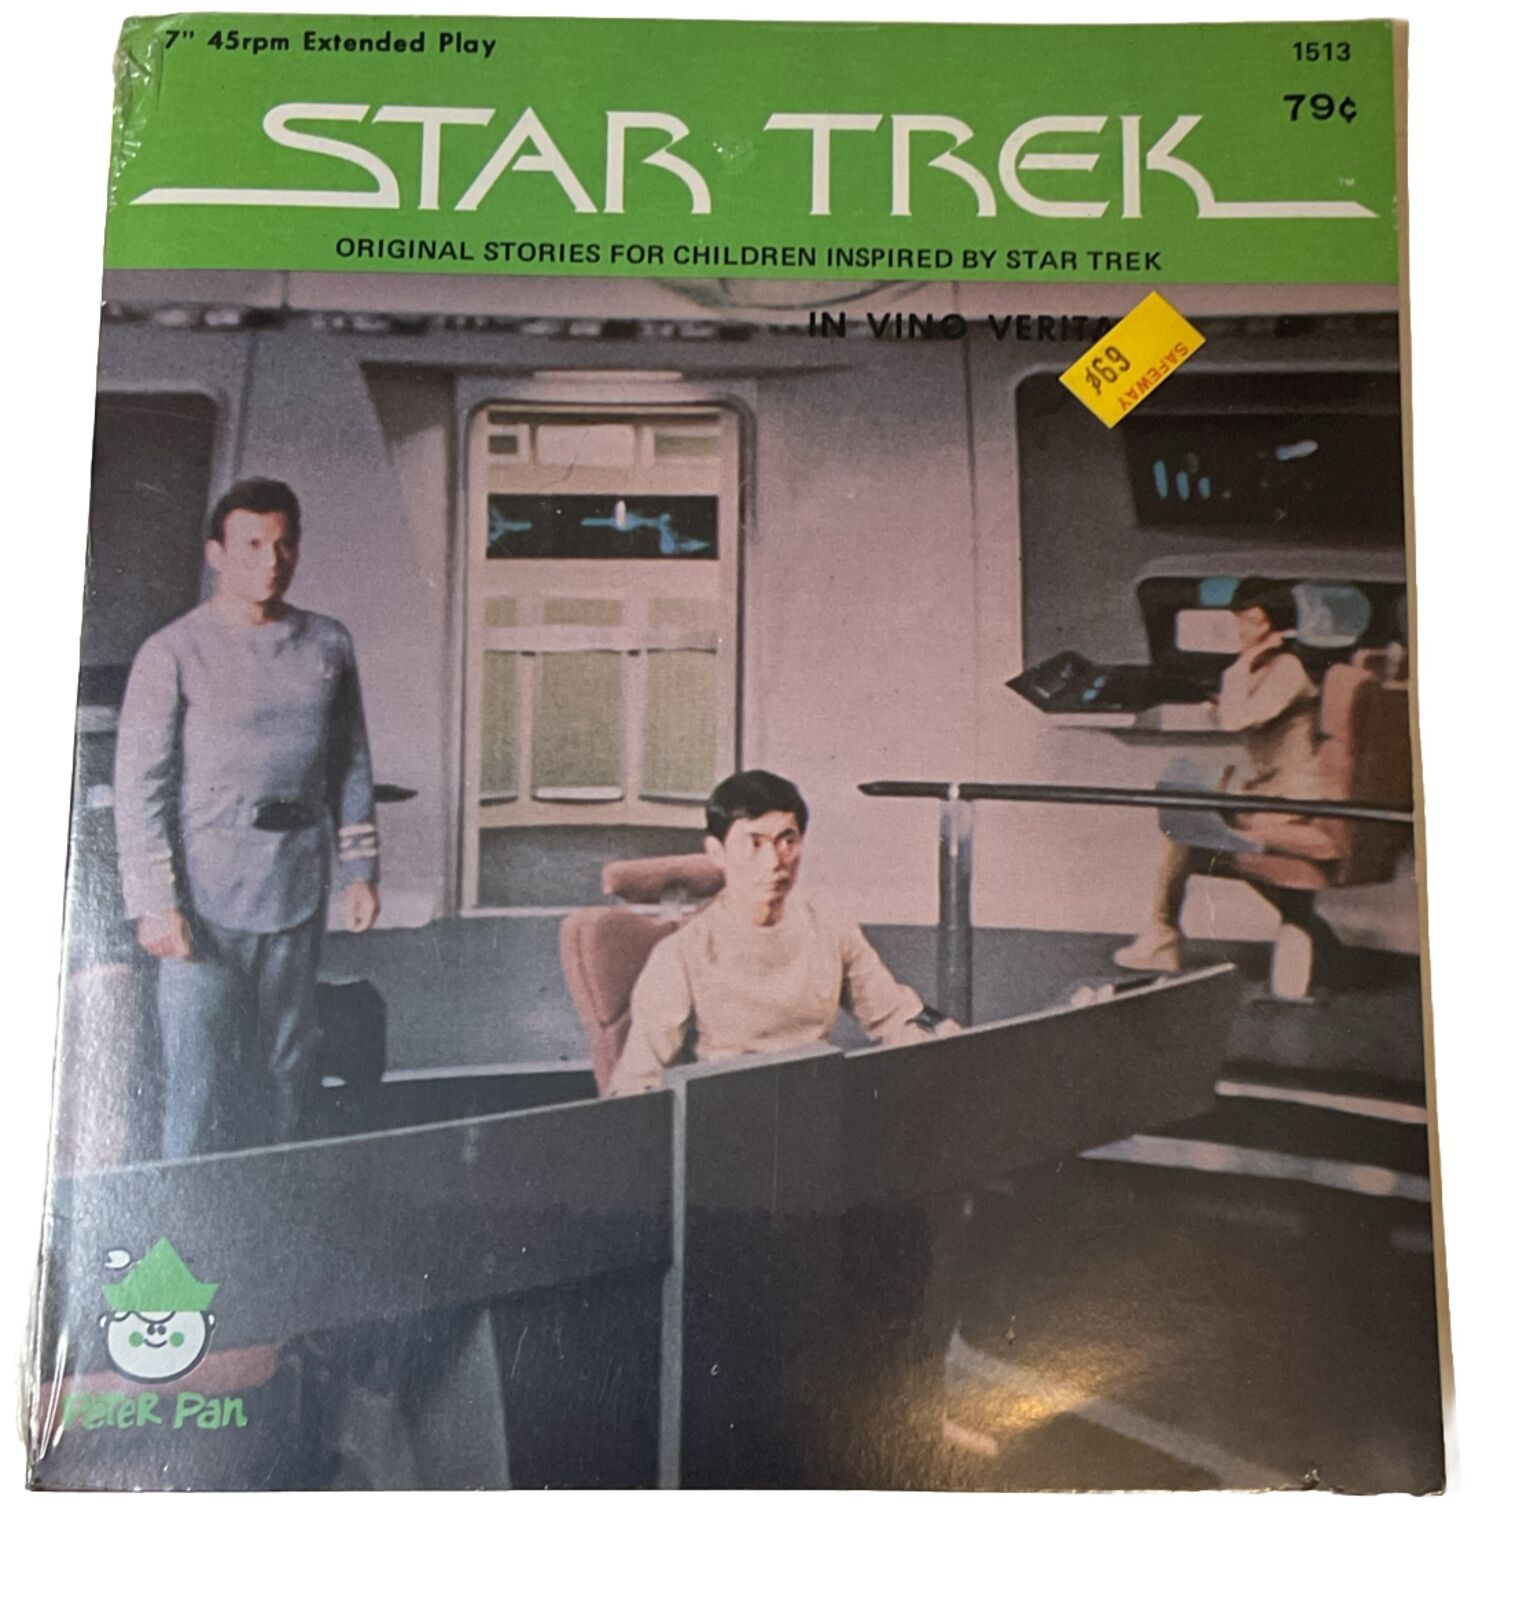 1979 Star Trek 45 RPM 7 Inch Vinyl Records - Complete Set of 4 Vintage Rare